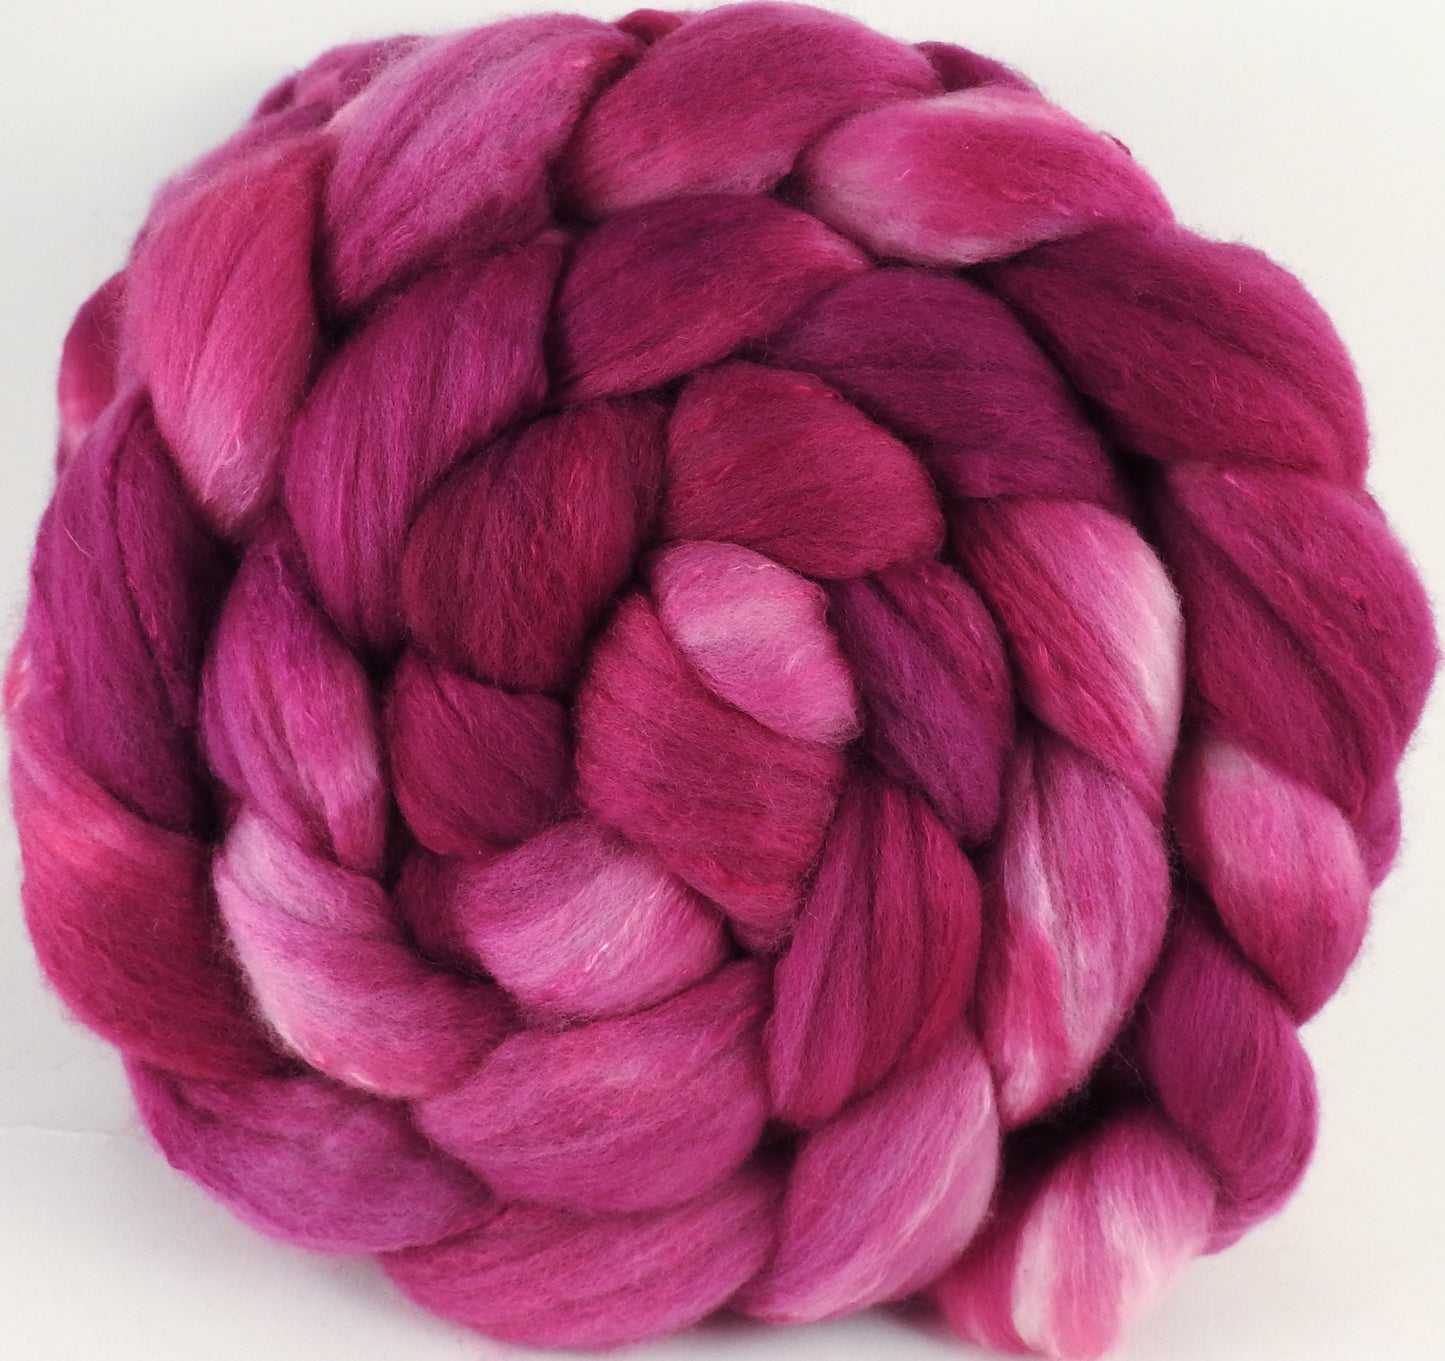 Hand dyed top for spinning - Redbud - (5.3 oz) Organic Polwarth / Tussah silk (80/20) - Inglenook Fibers